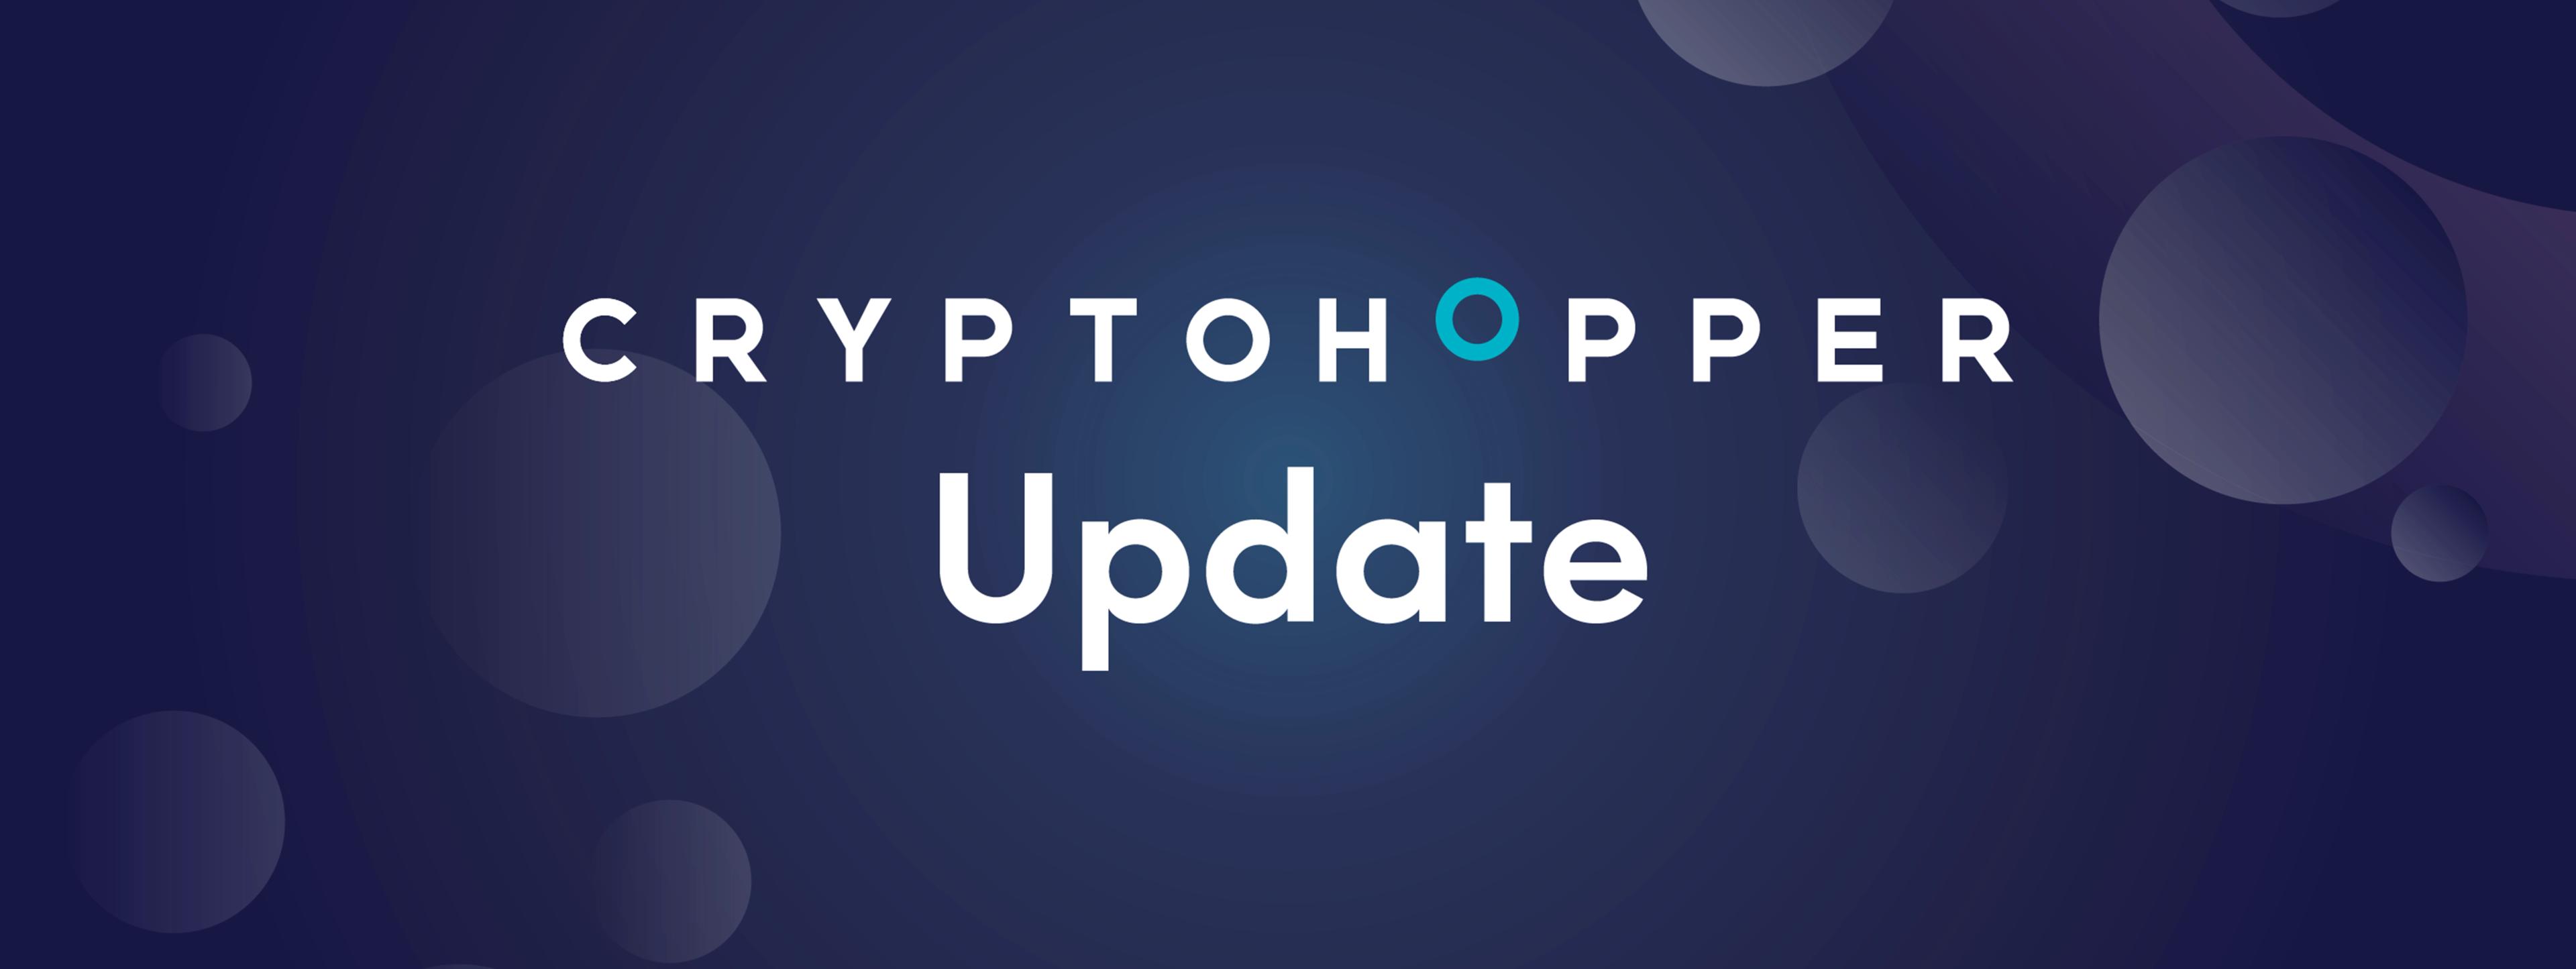 Cryptohopper Database Migration & Update 